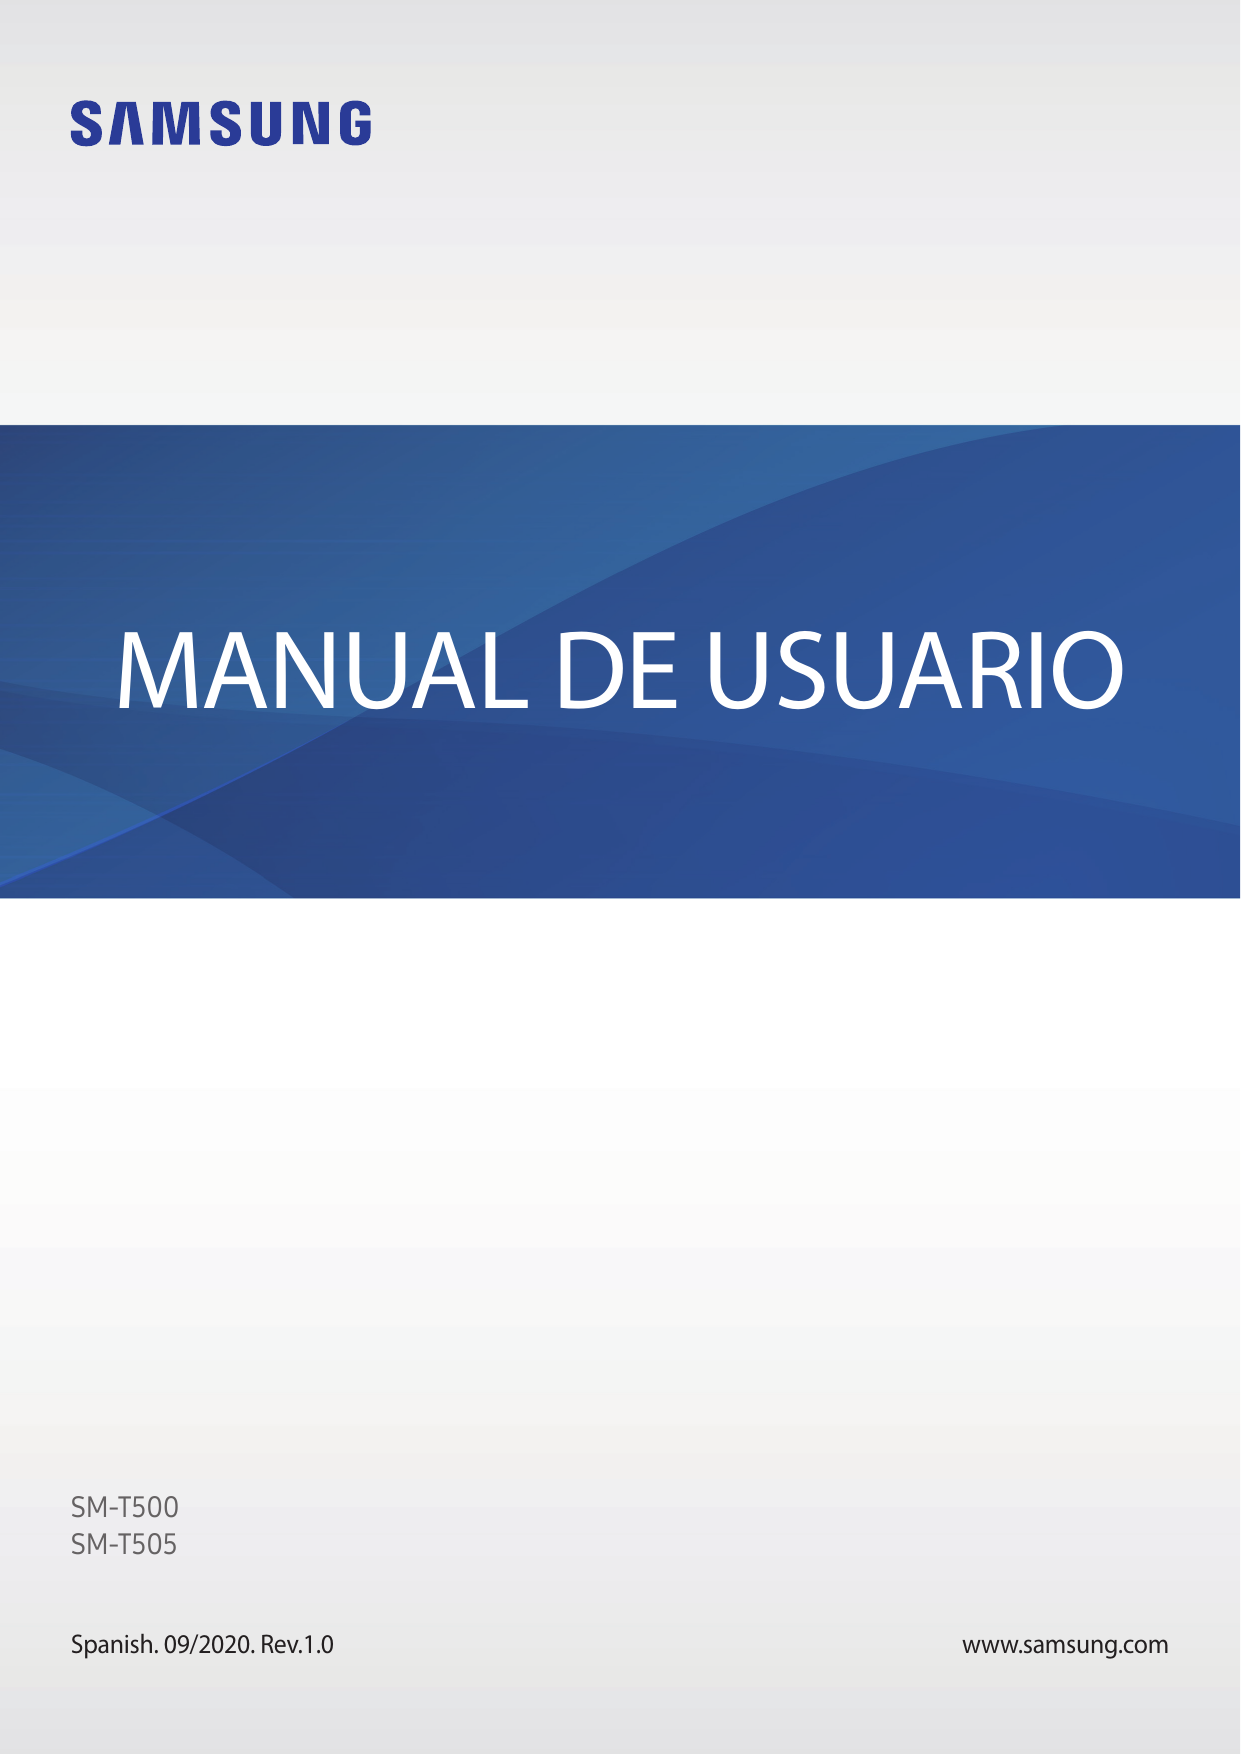 MANUAL DE USUARIOSM-T500SM-T505Spanish. 09/2020. Rev.1.0www.samsung.com